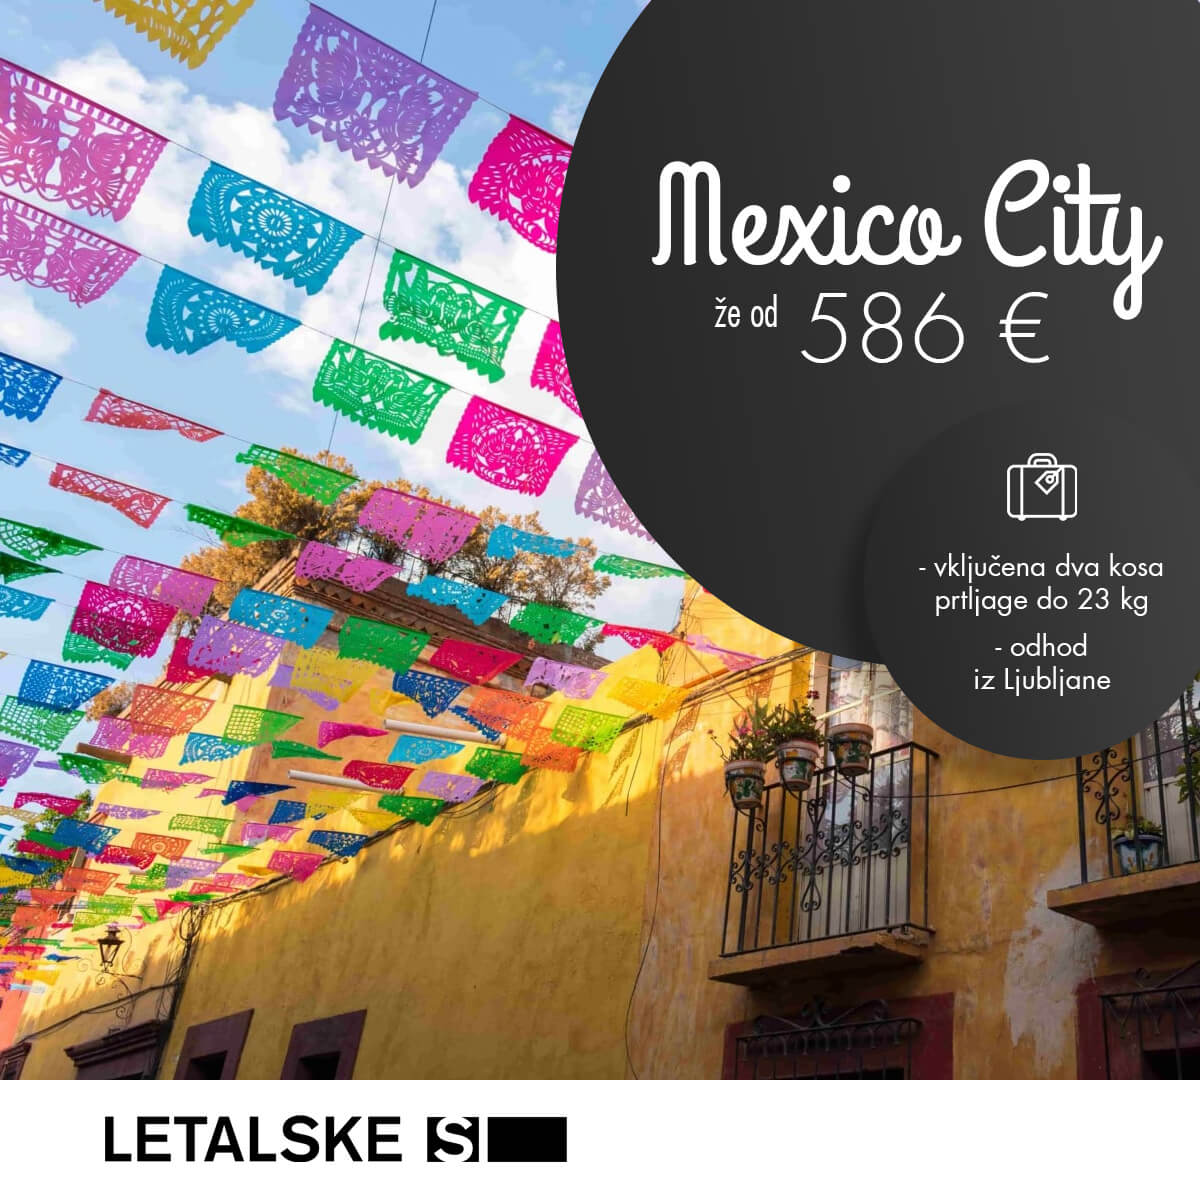 Mexico City vizual, Mexico City već od 5450 kuna, Mexico City jeftine avio karte, putovanje u Mexico City 